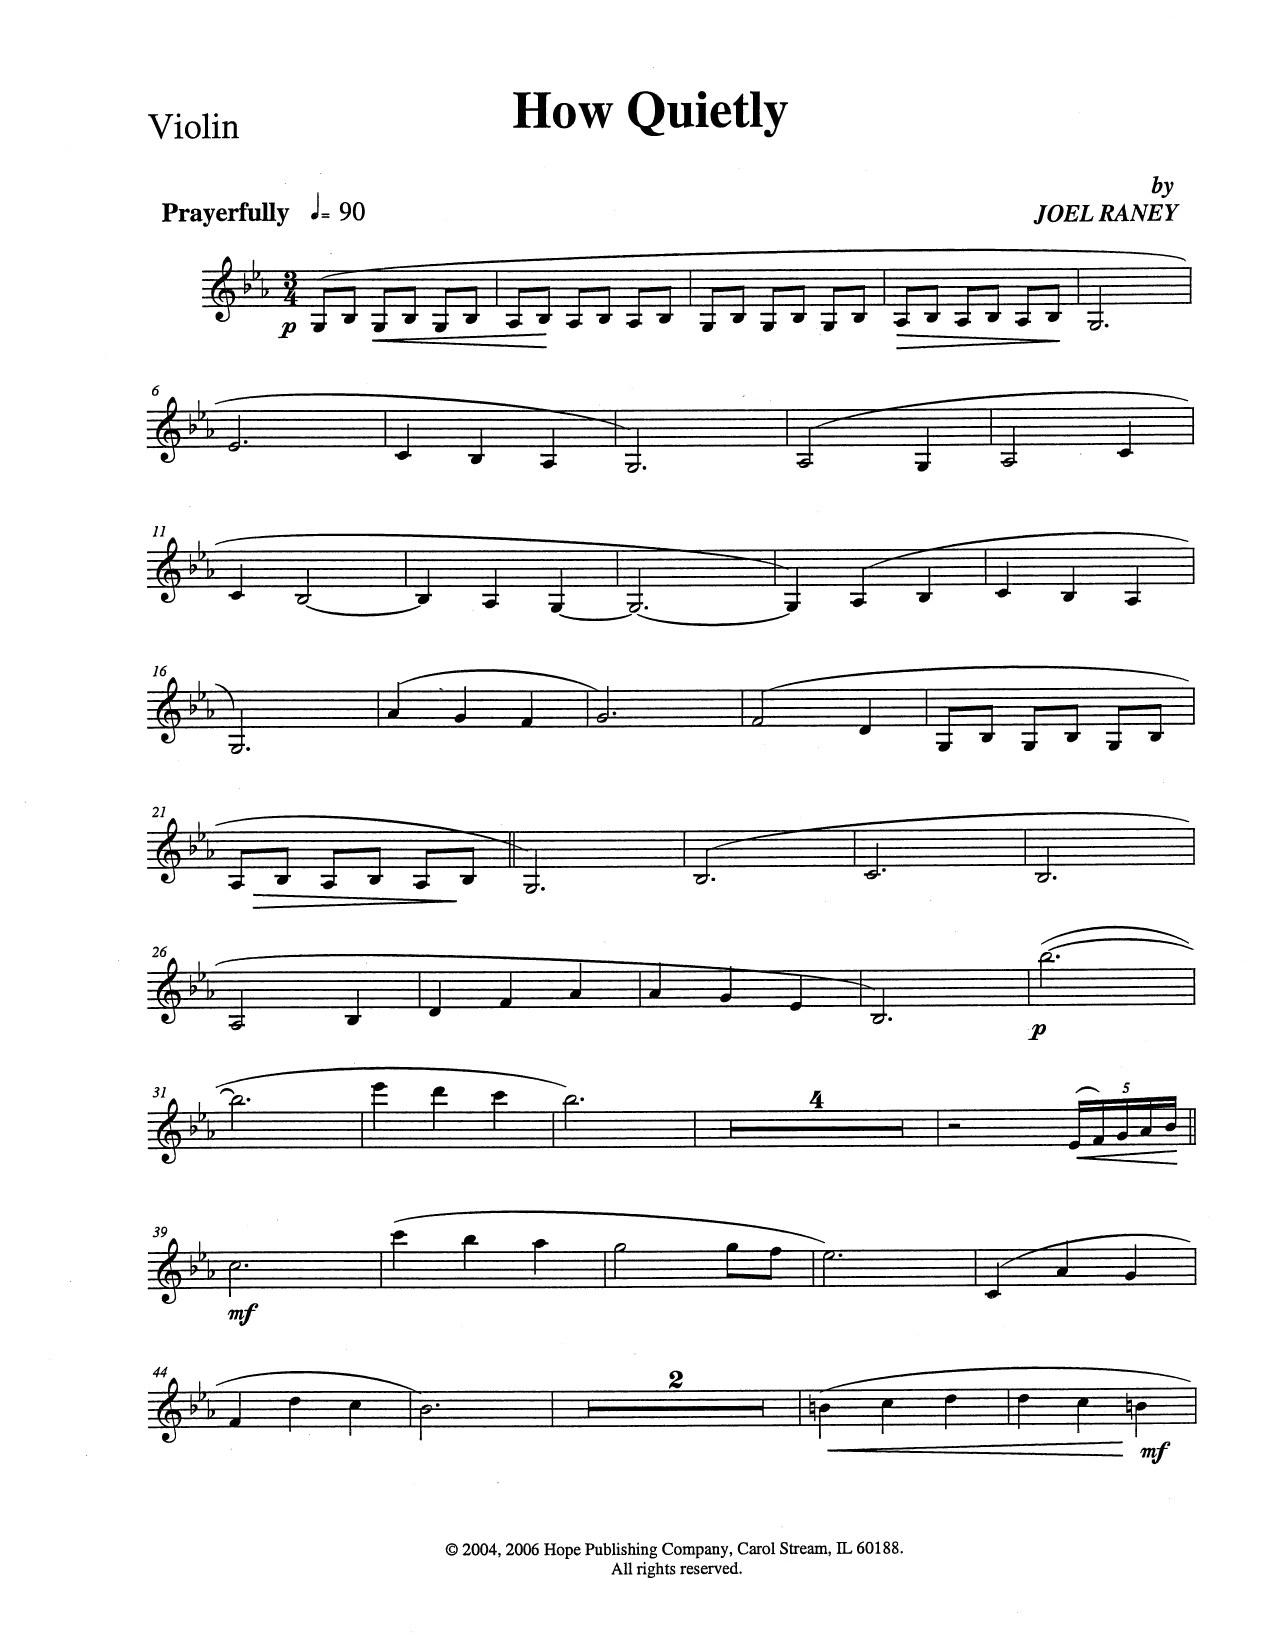 Joel Raney How Quietly - Violin Sheet Music Notes & Chords for Choir Instrumental Pak - Download or Print PDF